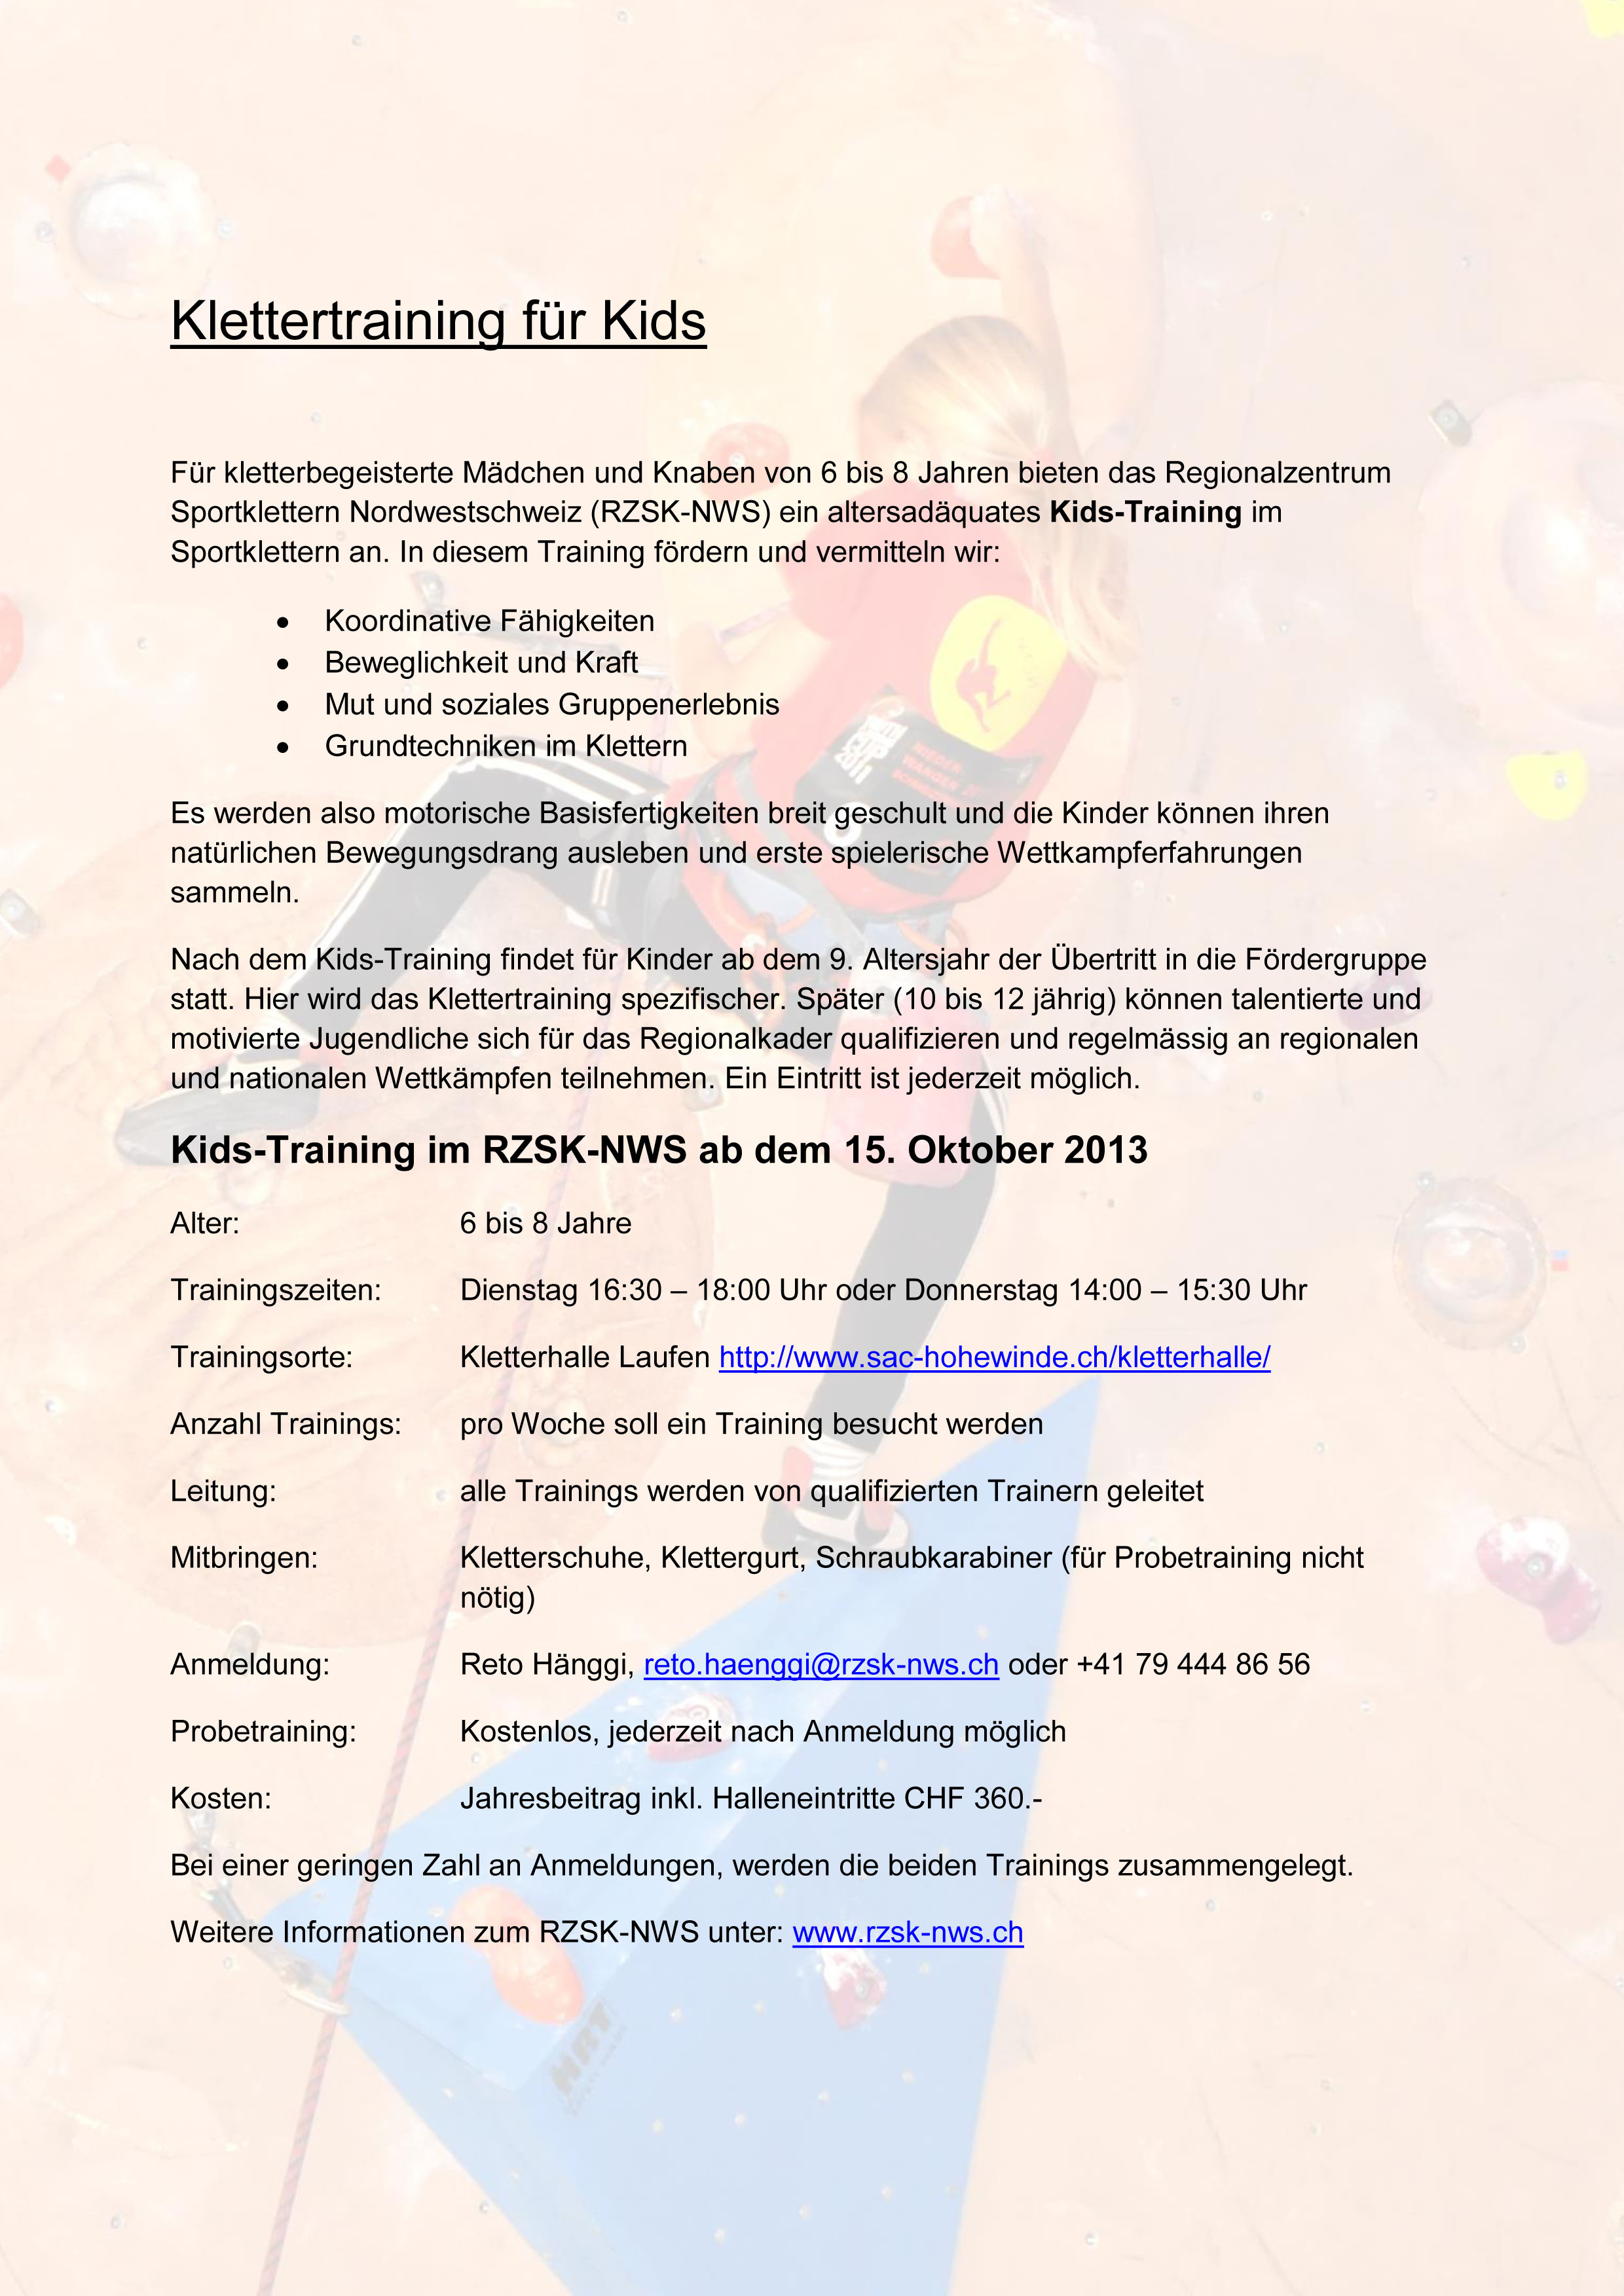 Flyer Kids-Training Laufen RZSK-NWS 2013.jpg - 894.06 KB